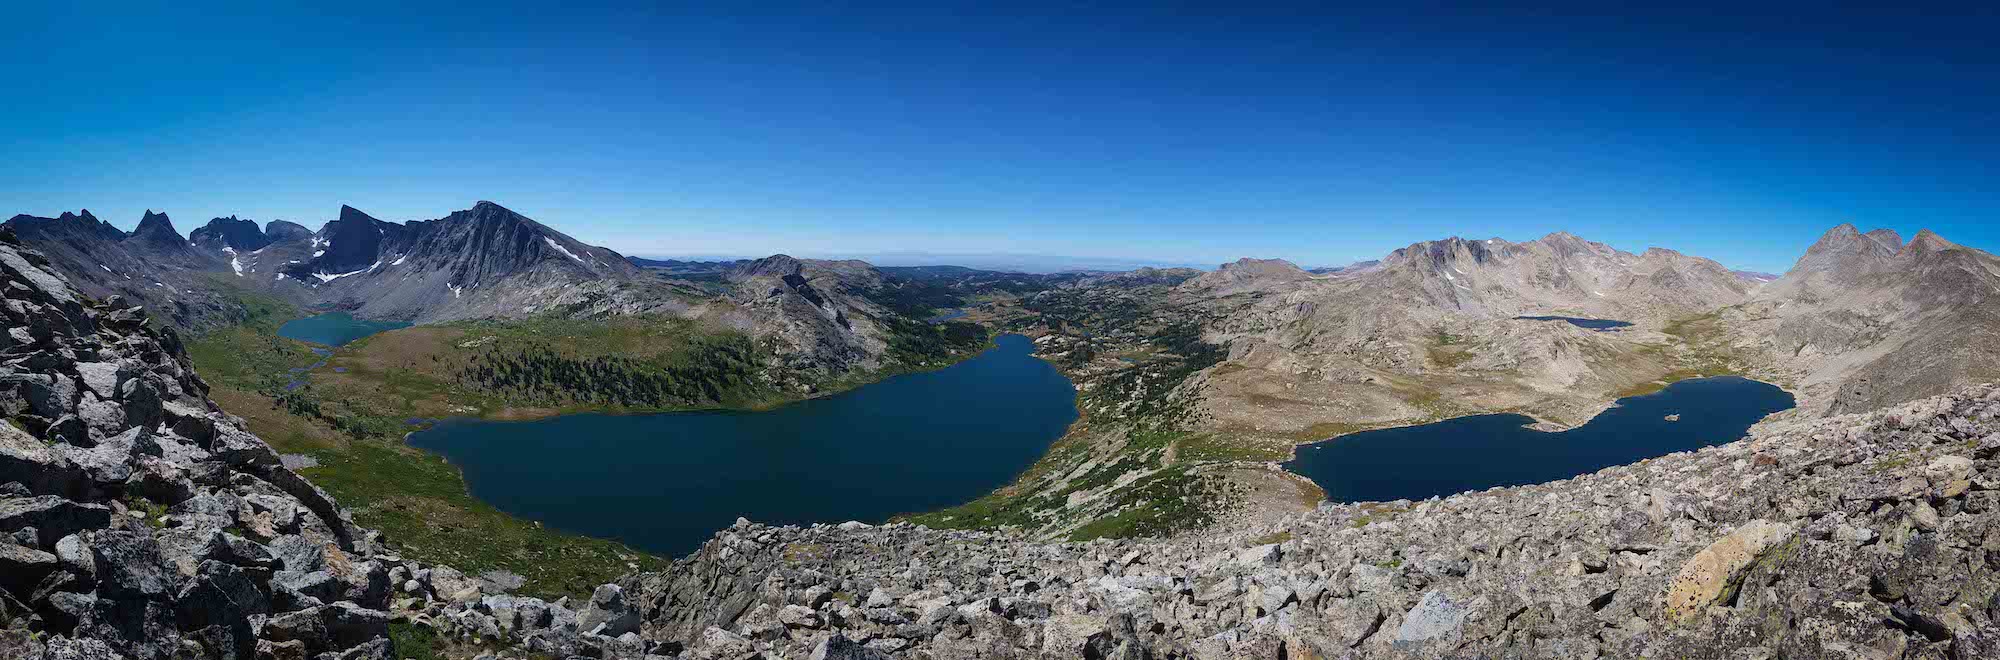 Big Lake Pass in Wyoming's Wind River Range. Photo by Brock Dallman